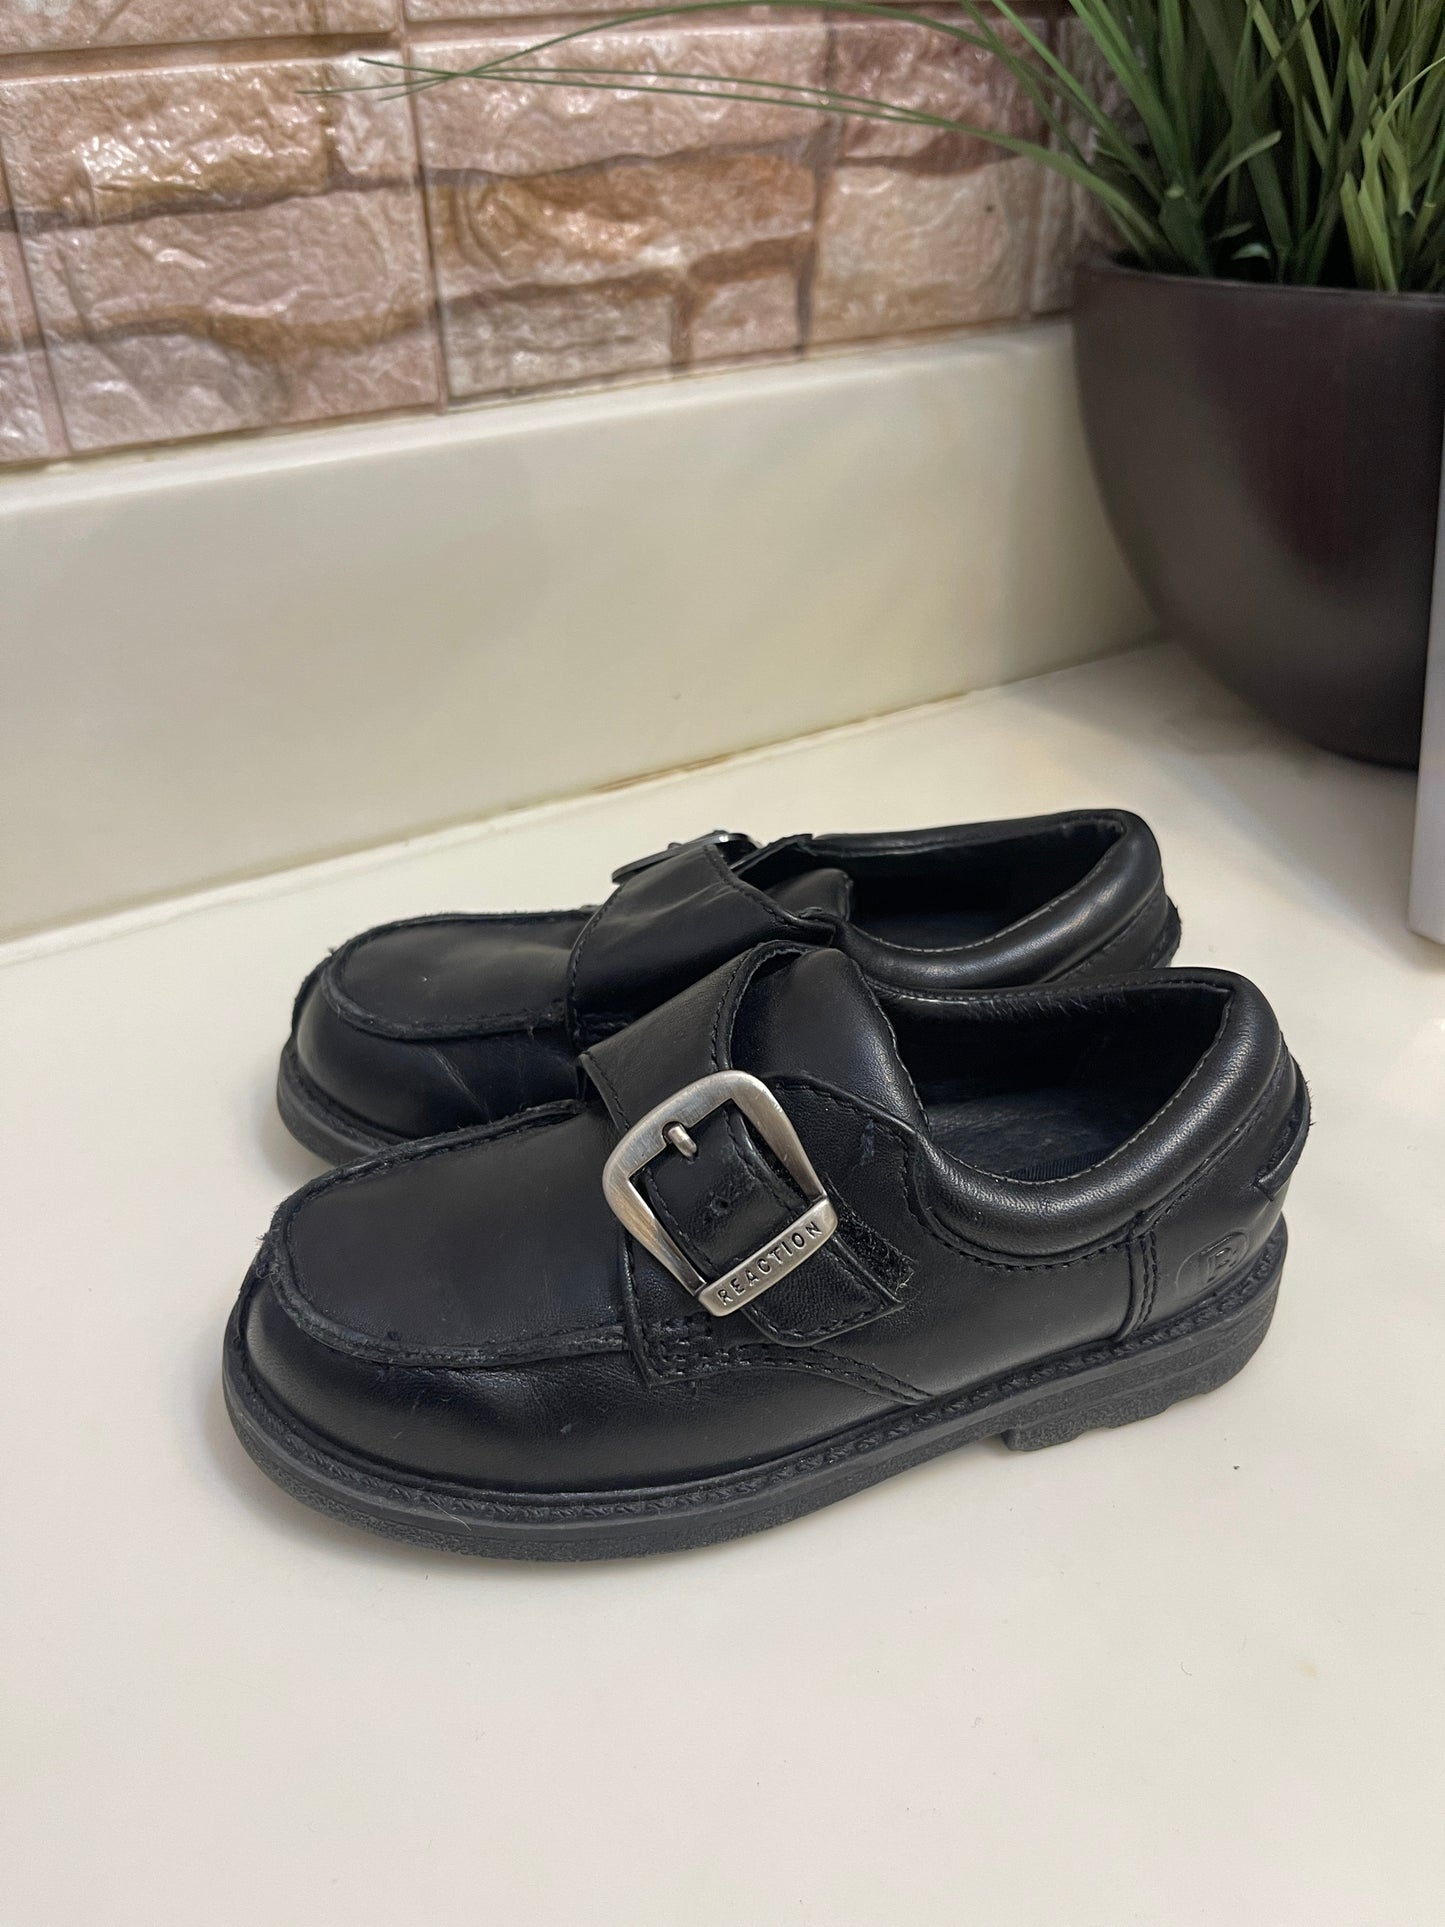 Kenneth Cole Dress Shoes Black Boys Toddler sz 8.5